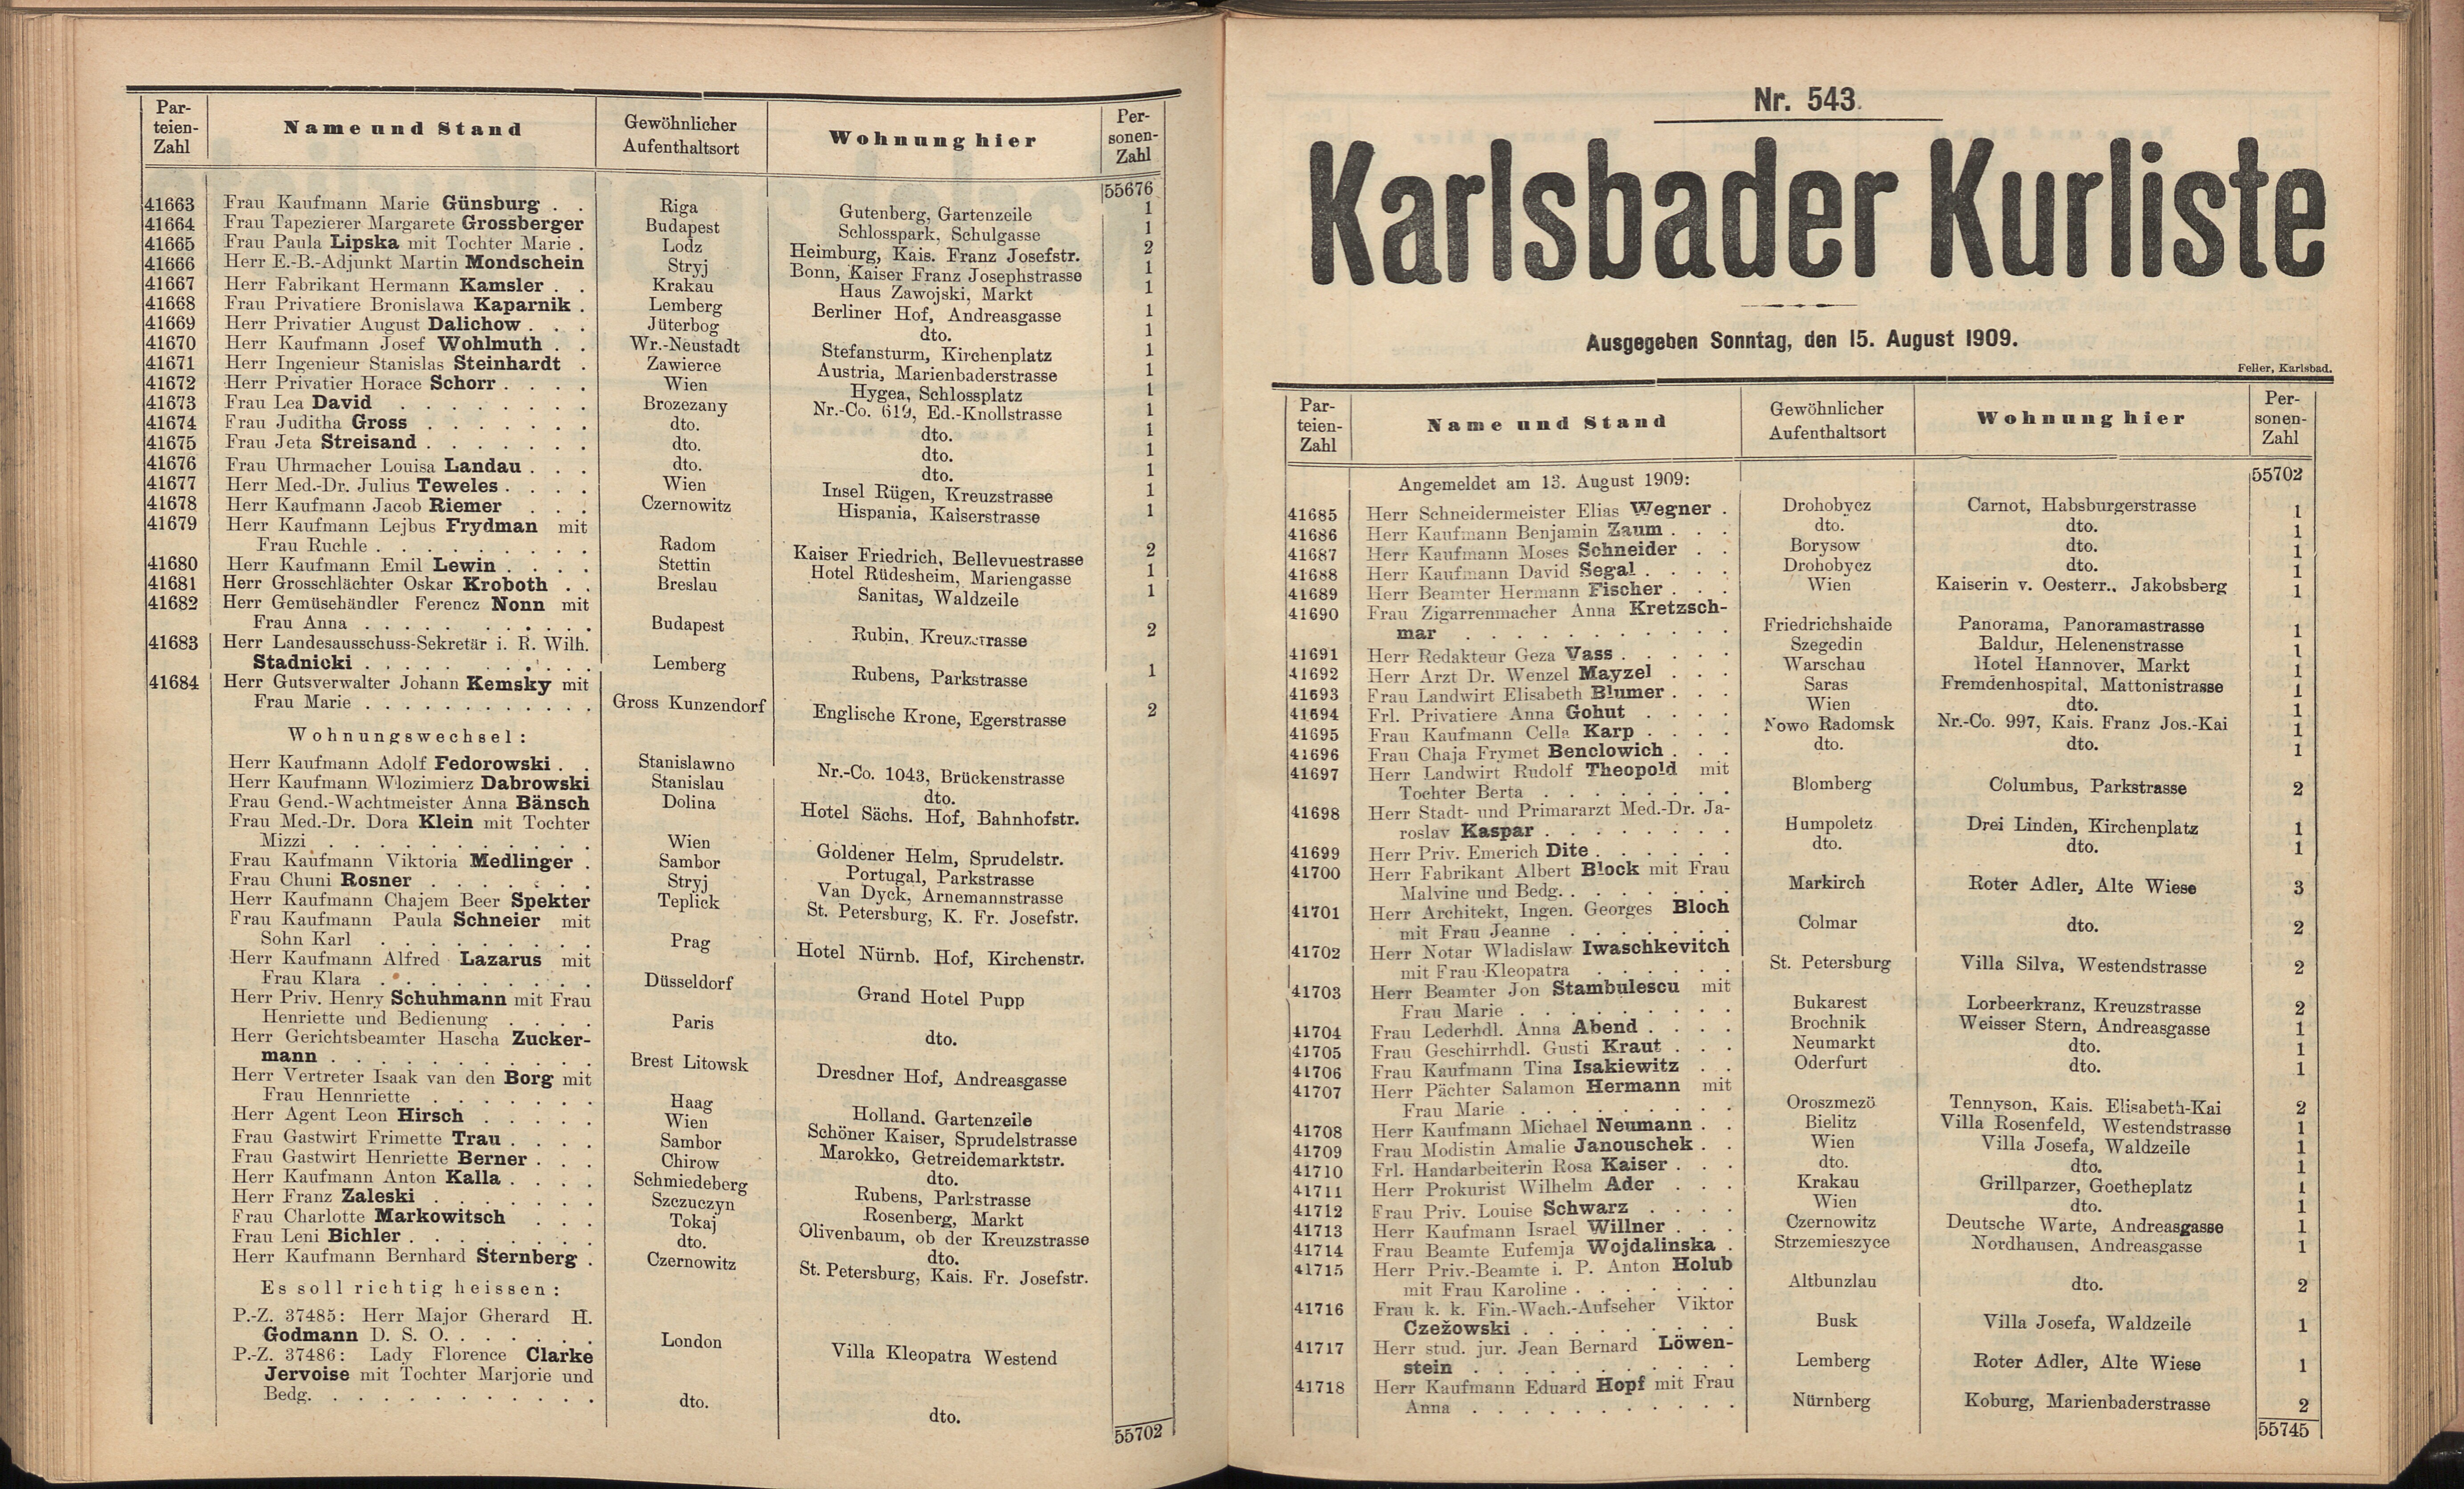 664. soap-kv_knihovna_karlsbader-kurliste-1909_6640